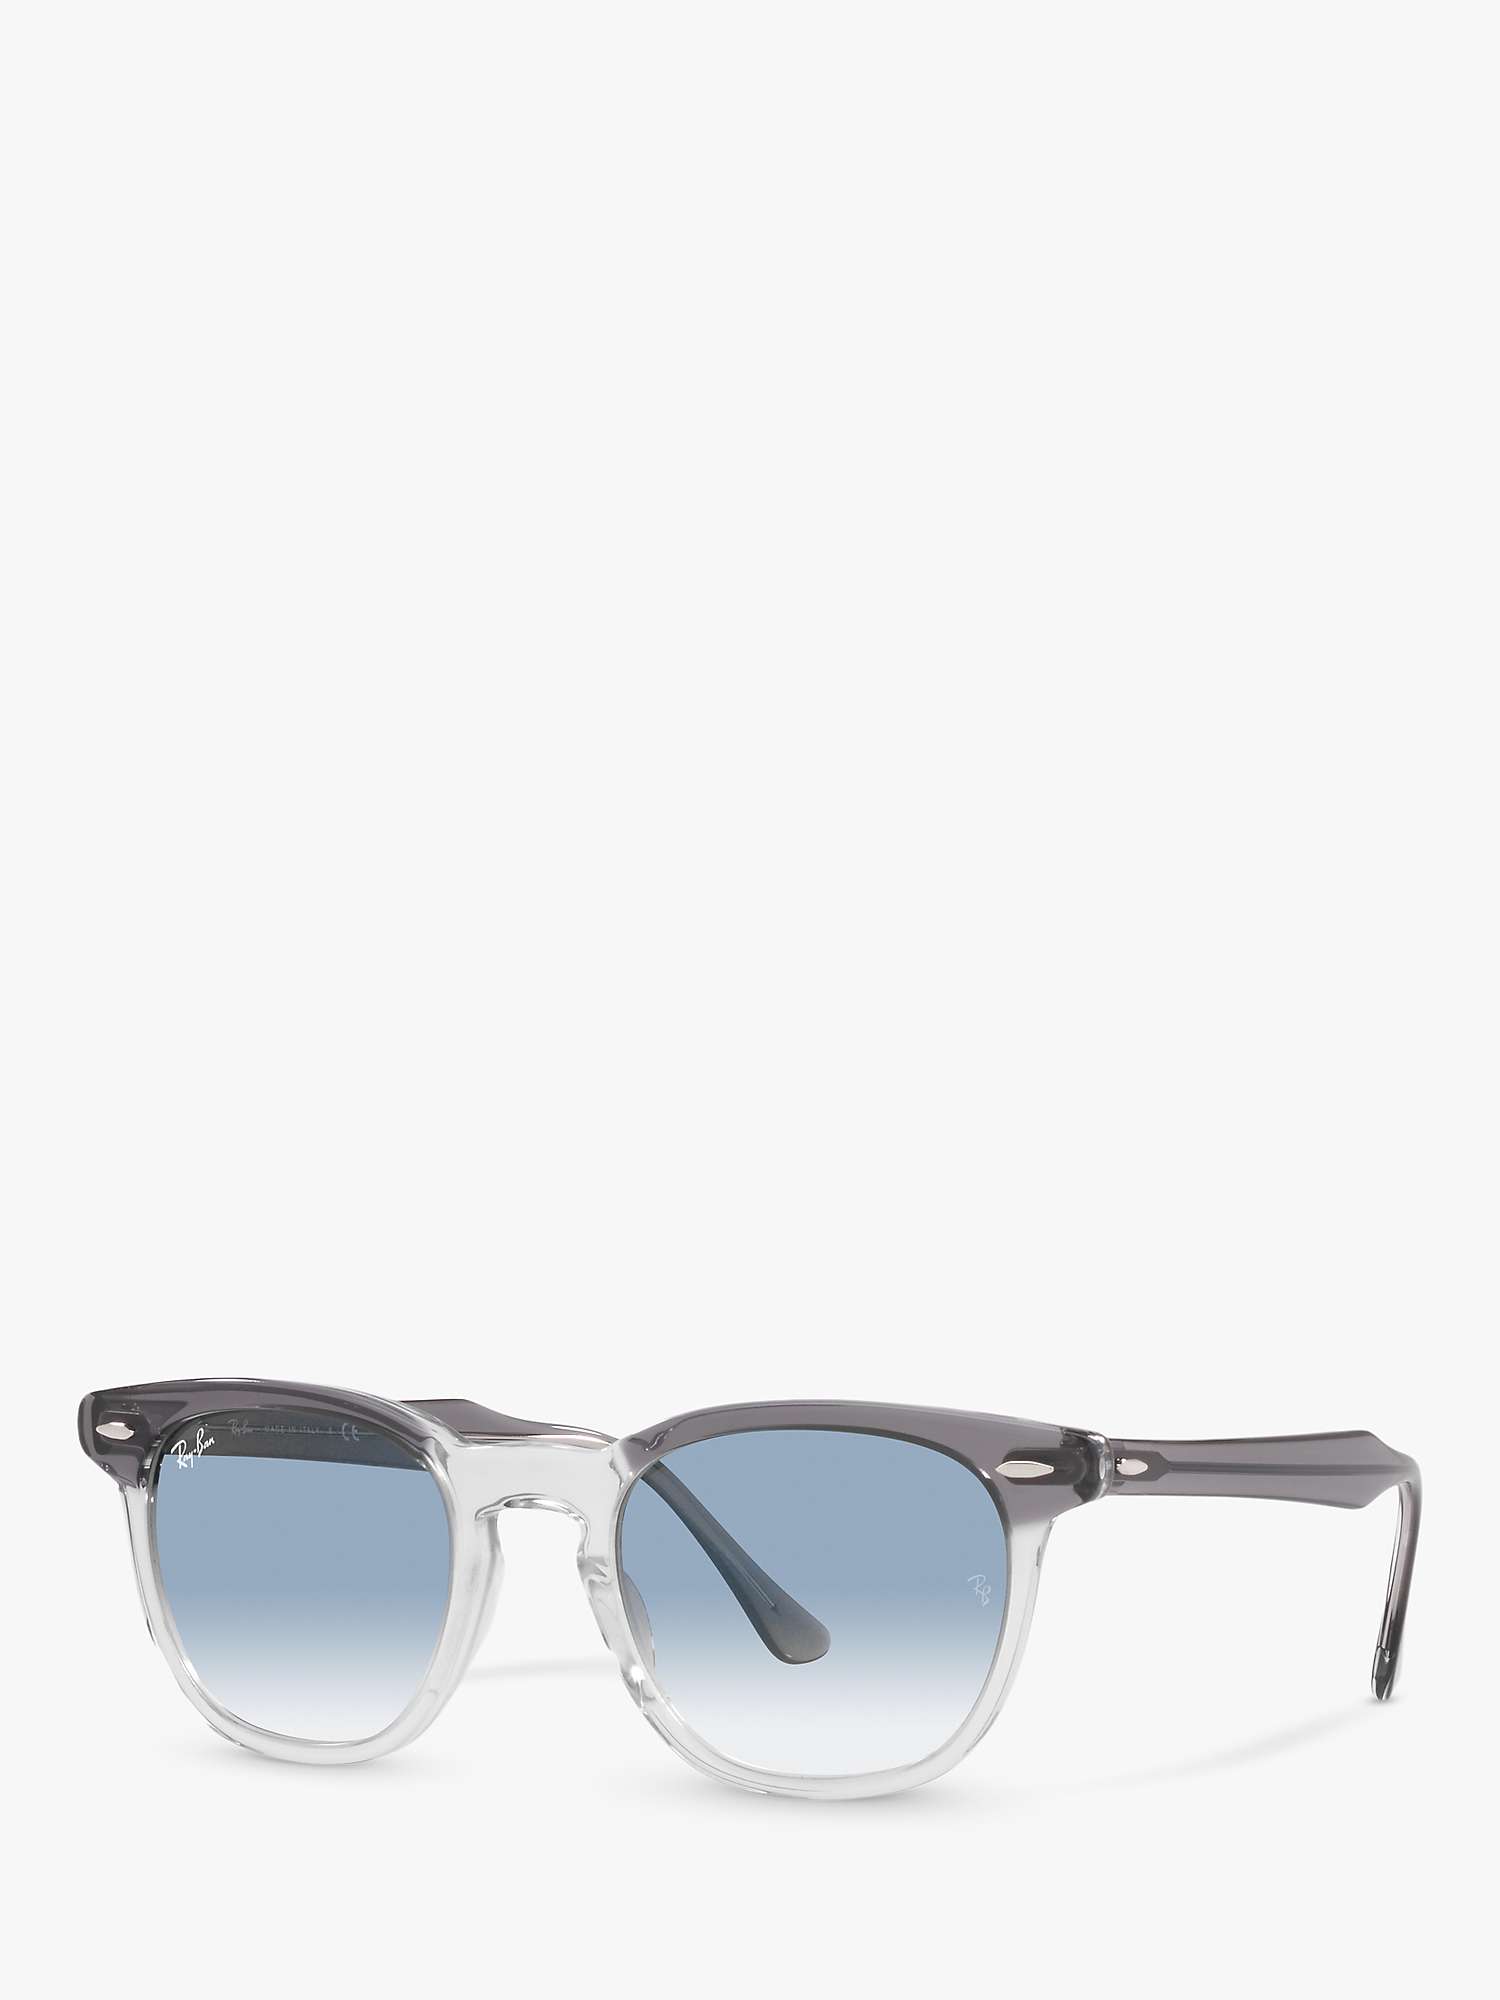 Buy Ray-Ban RB2298 Unisex Hawkeye Sunglasses, Transparent Grey/Blue Online at johnlewis.com